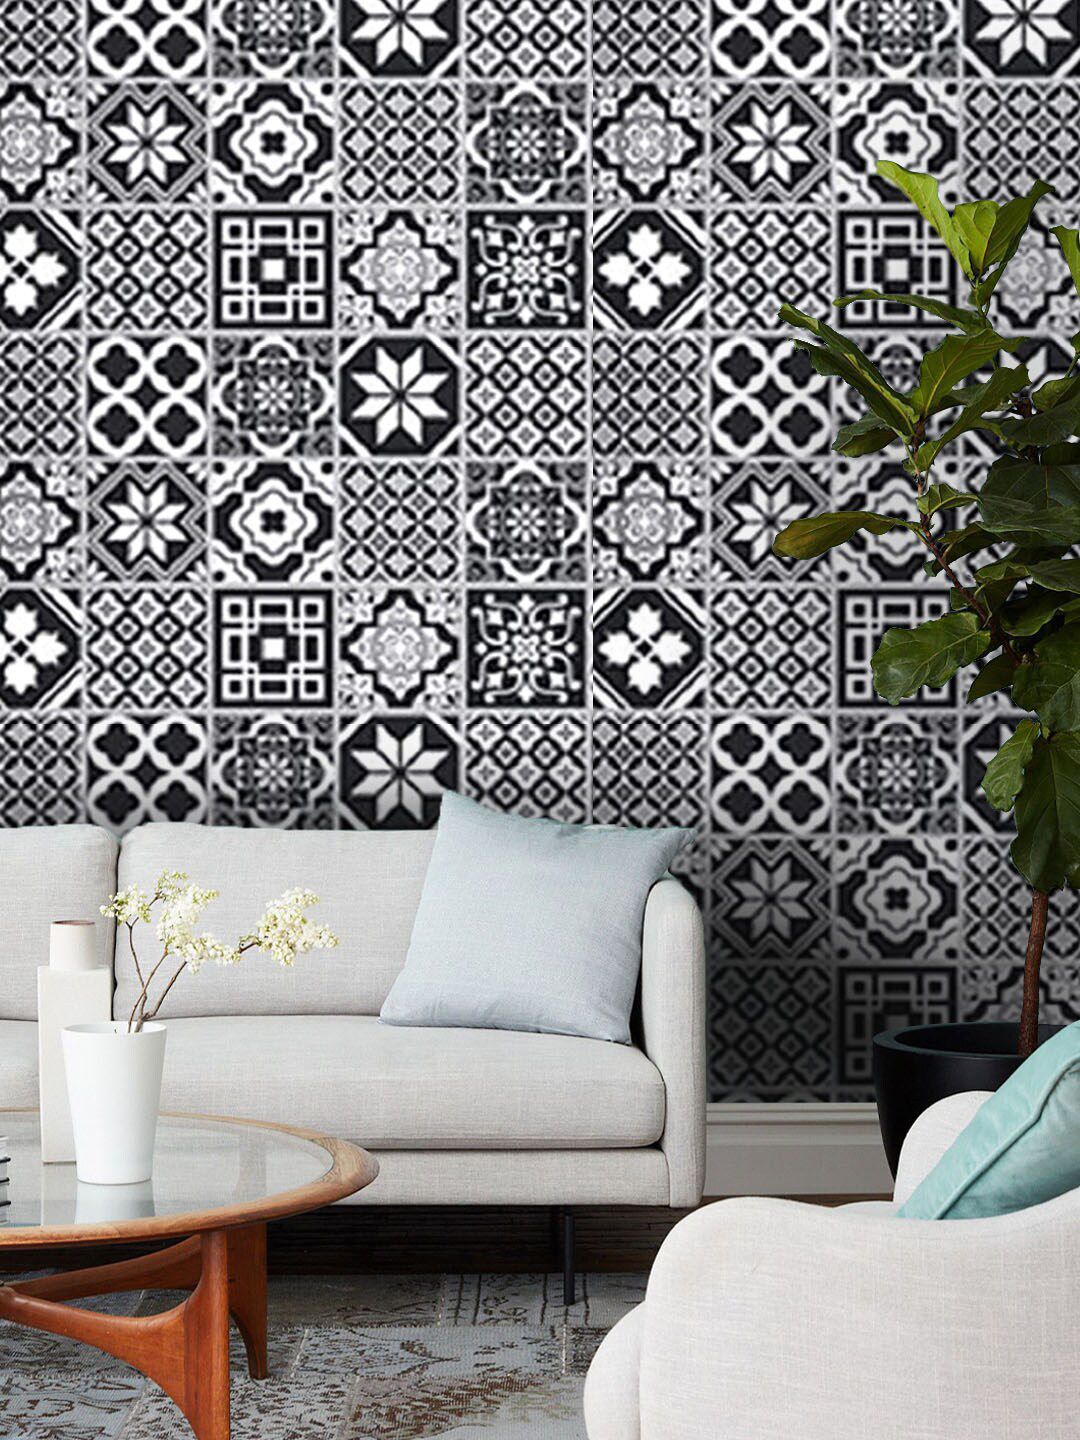 Jaamso Royals Black & White Self-adhesive & Waterproof Mosaic Tiles Wallpaper Price in India